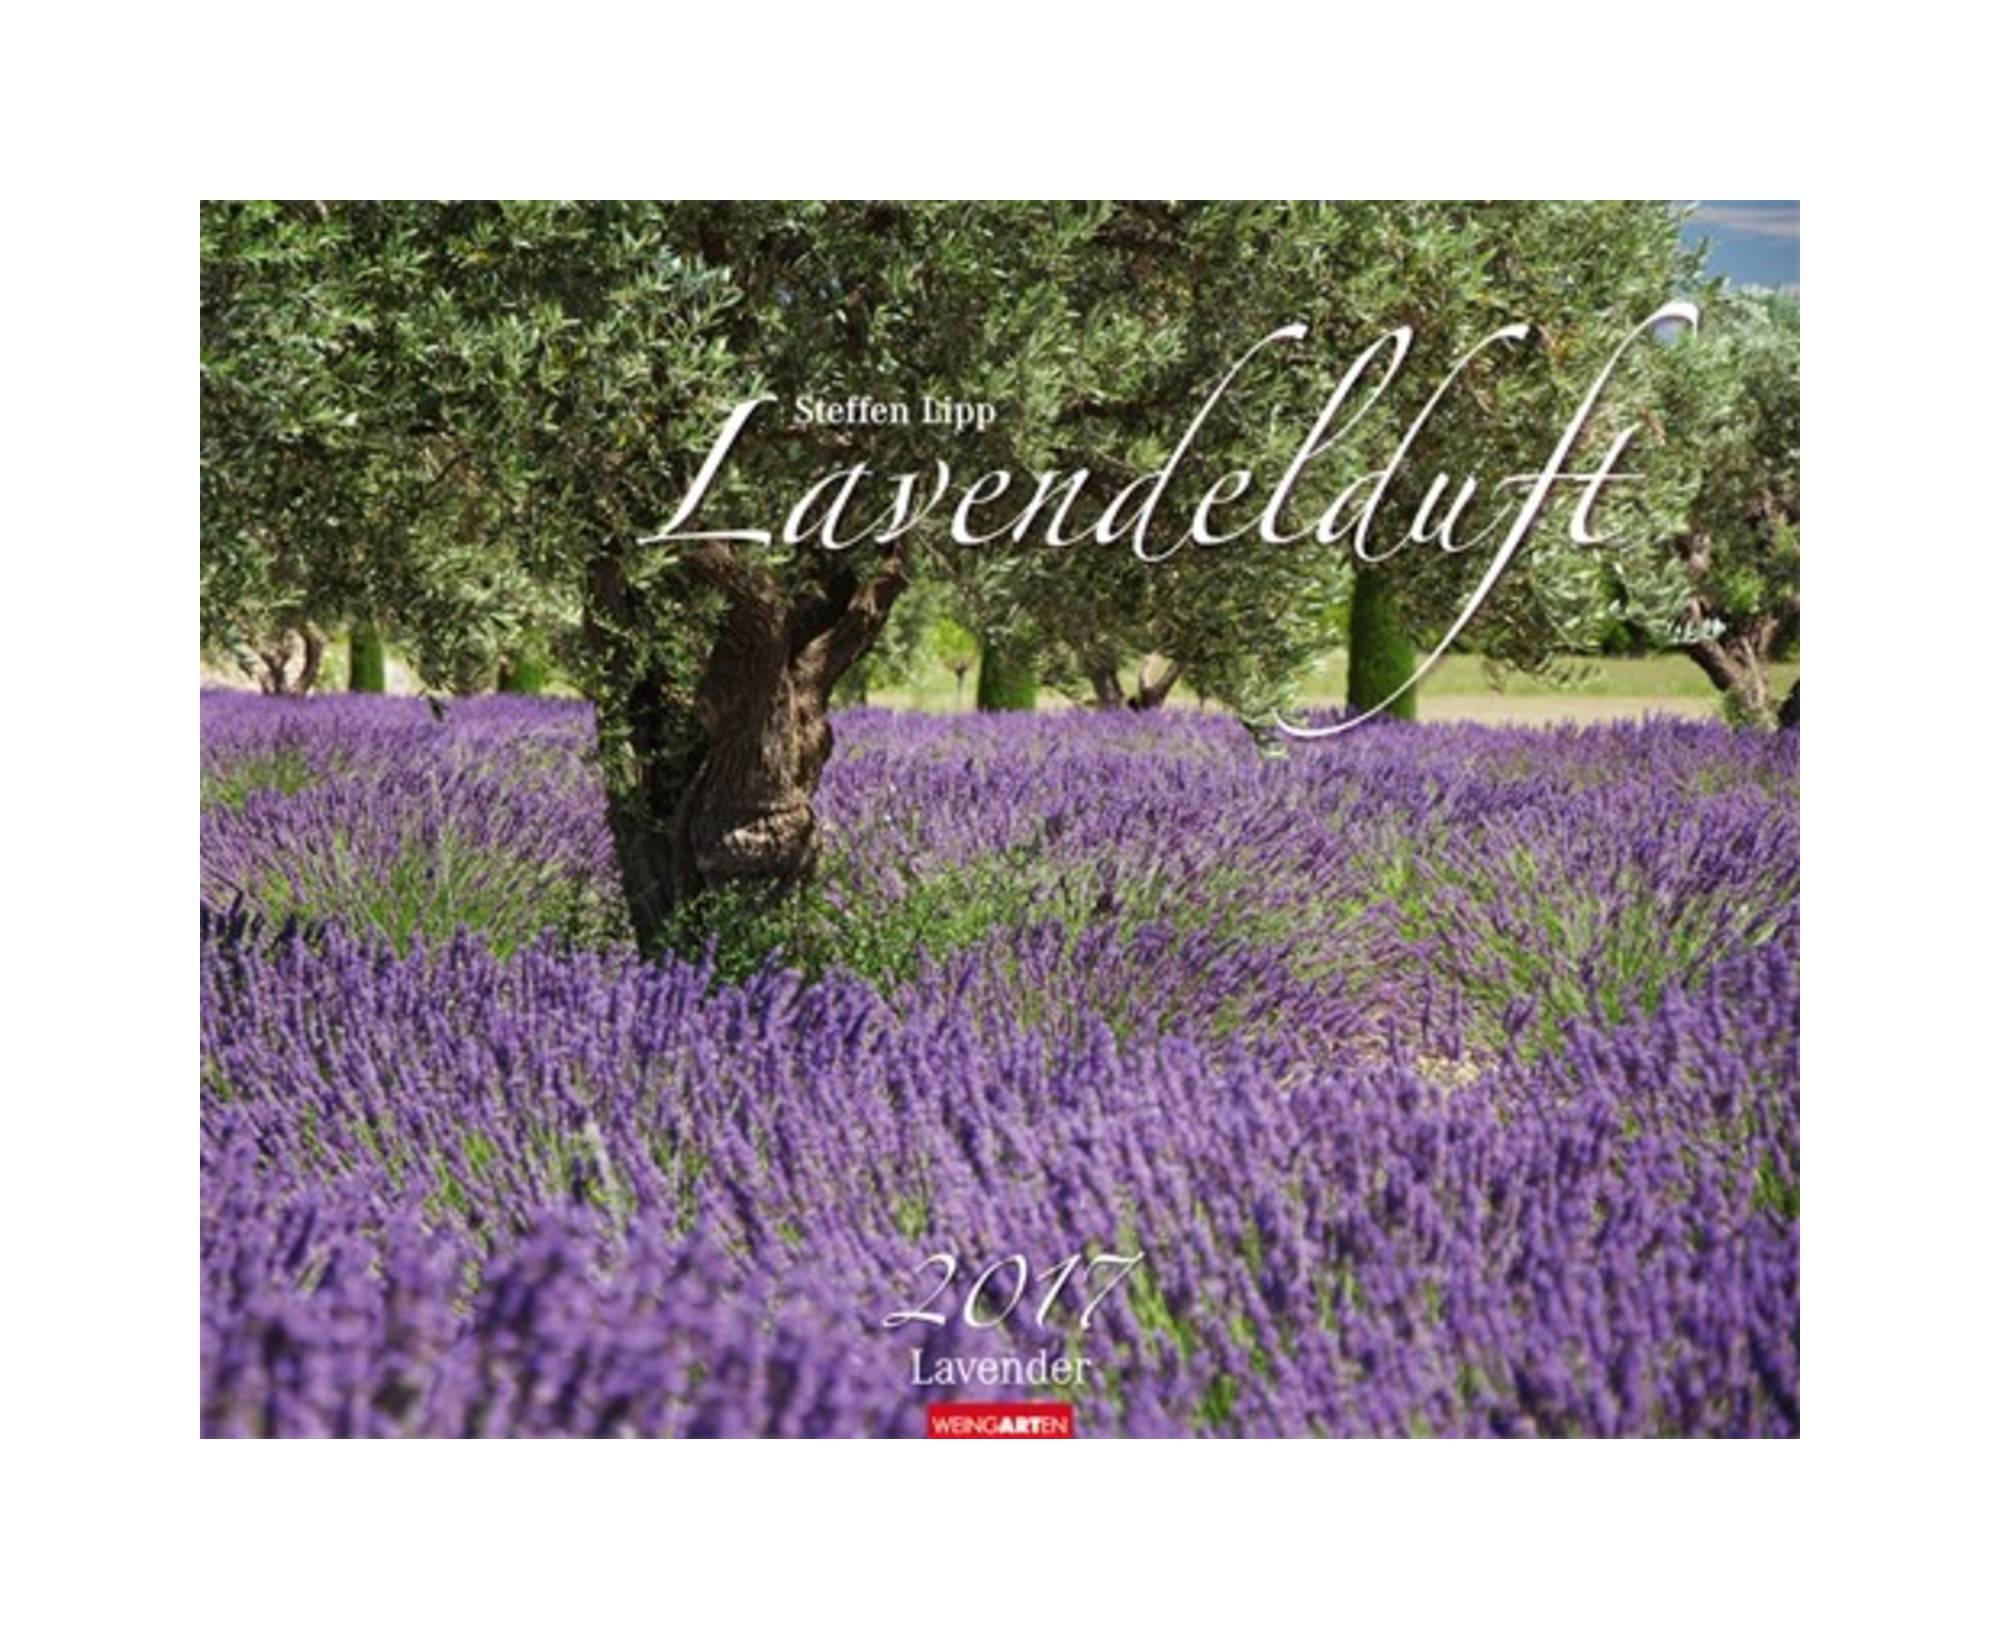 Kalender Lavendelduft 2017 Cover